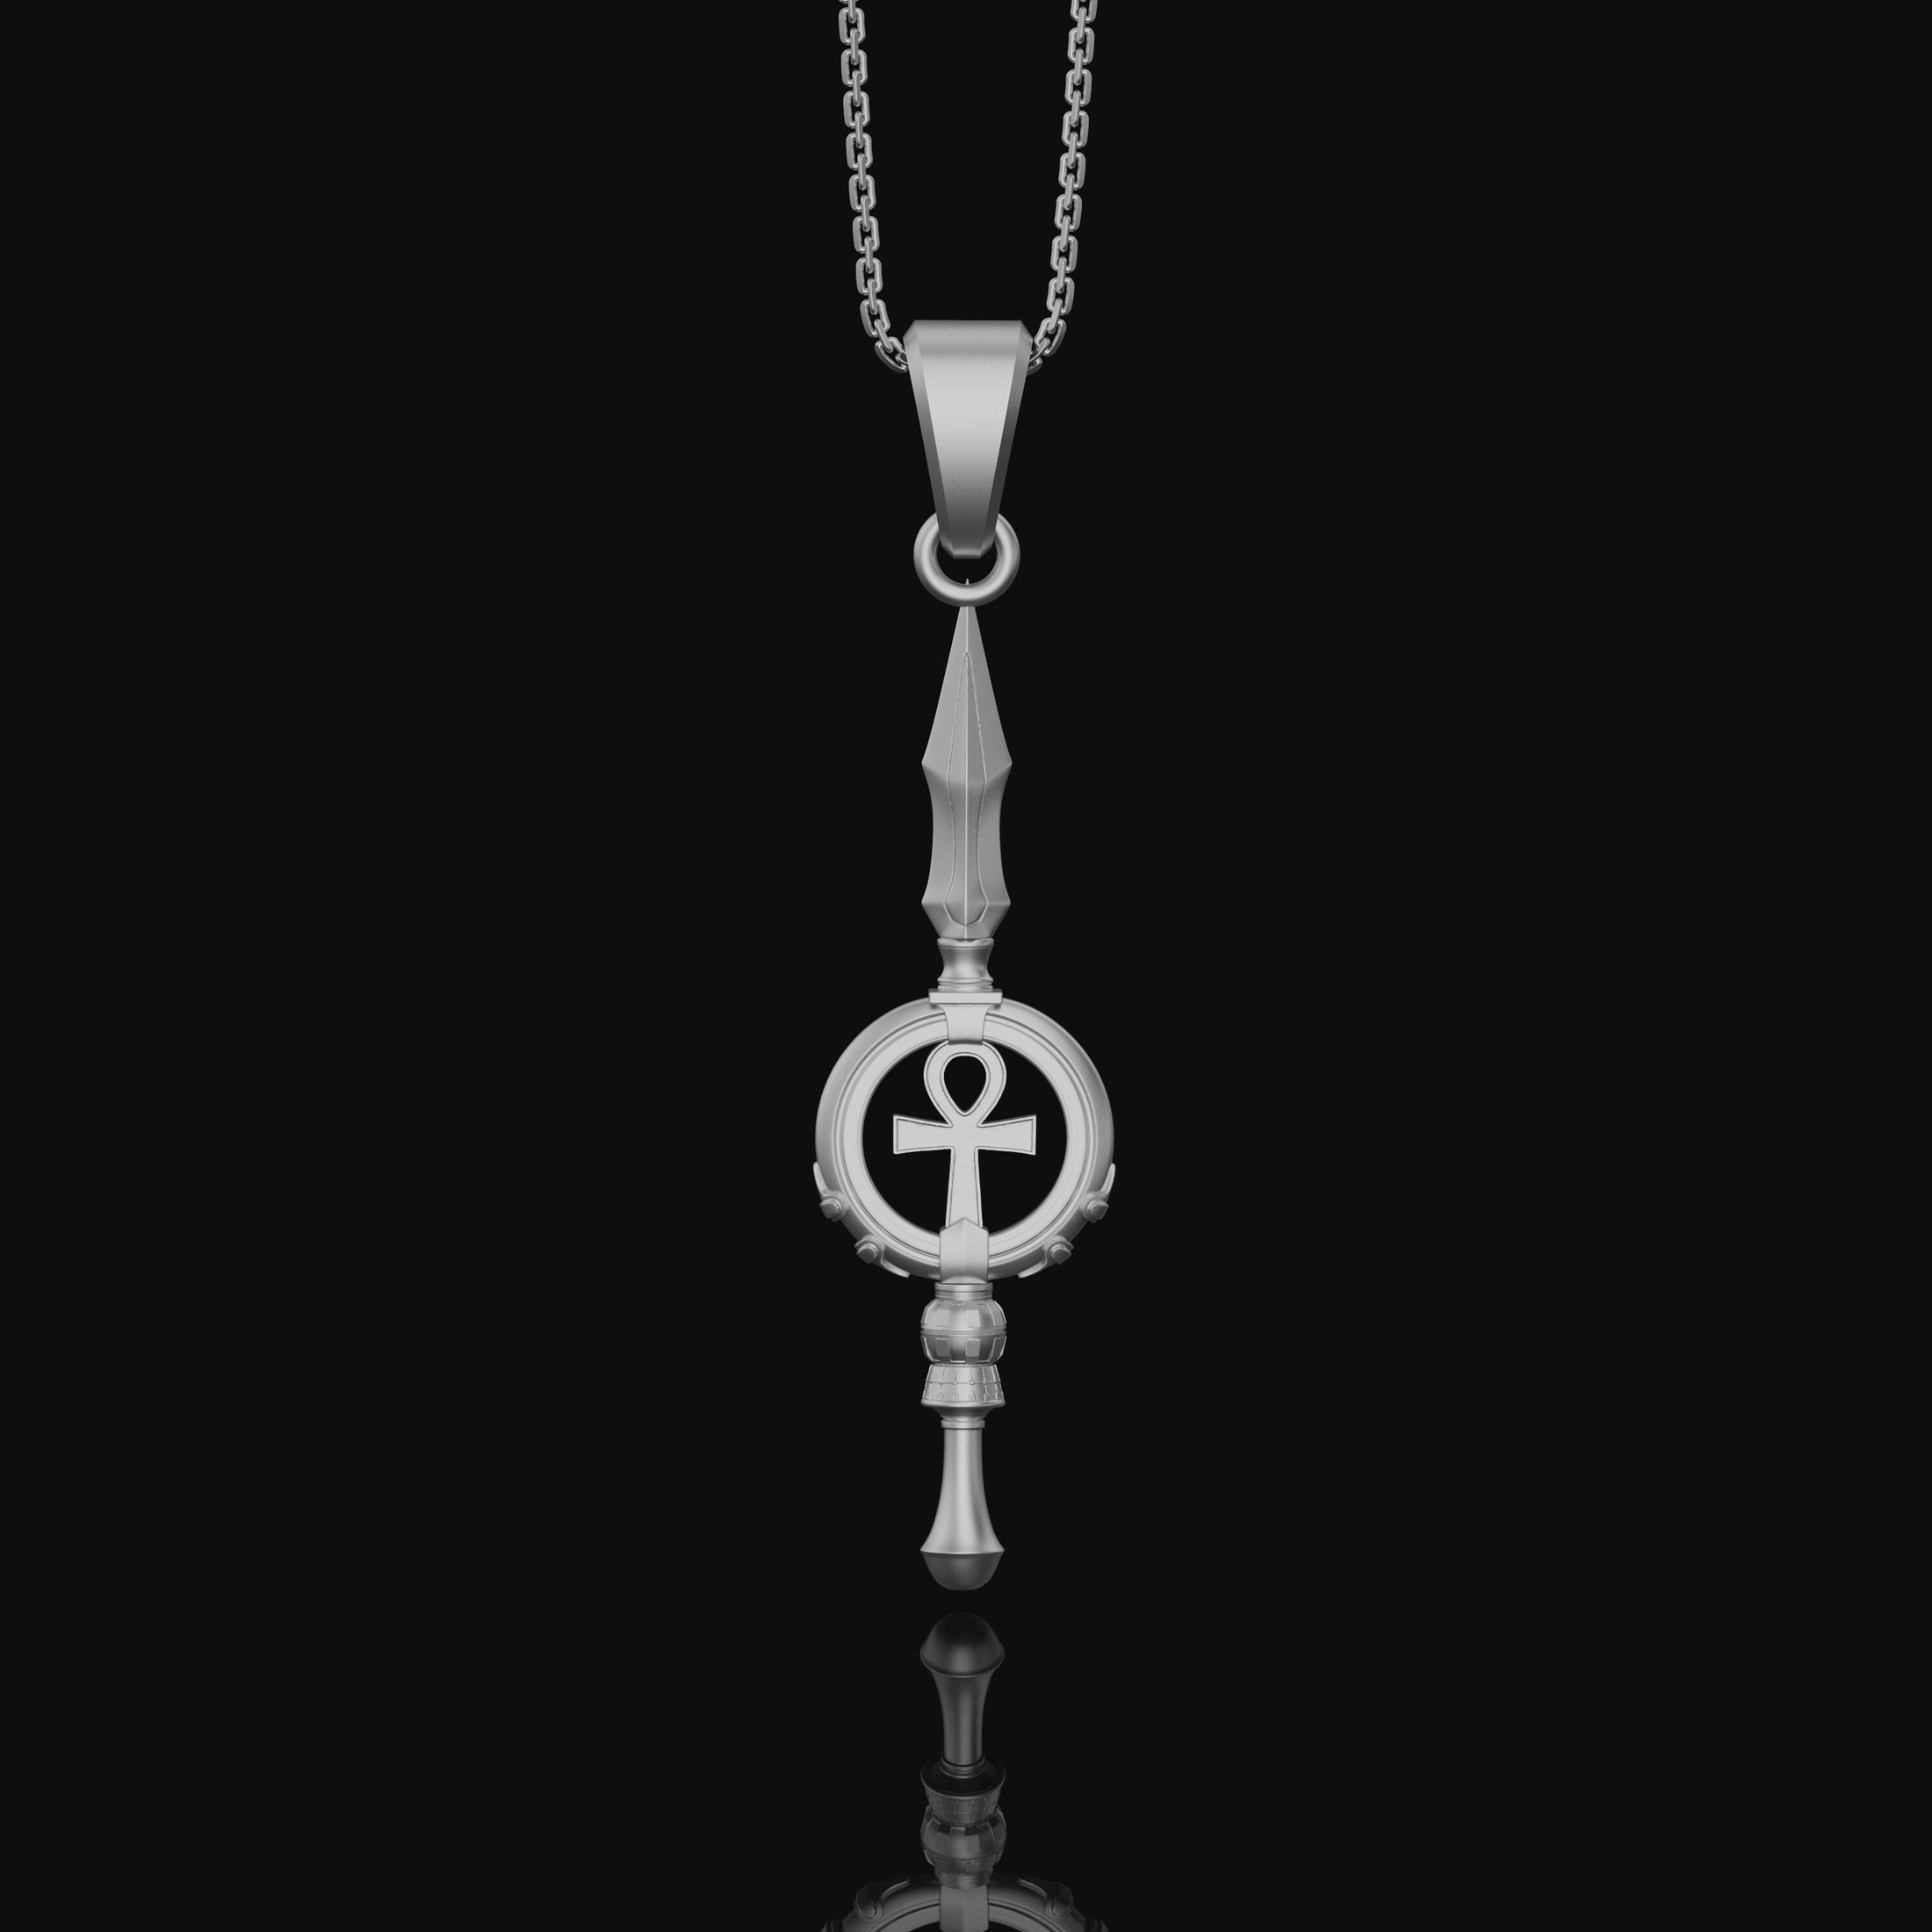 Silver Ankh Key Spear Charm Necklace - Elegant Ancient Egyptian Style, Spiritual Life Symbol, Warrior Inspired Jewelry Polished Finish